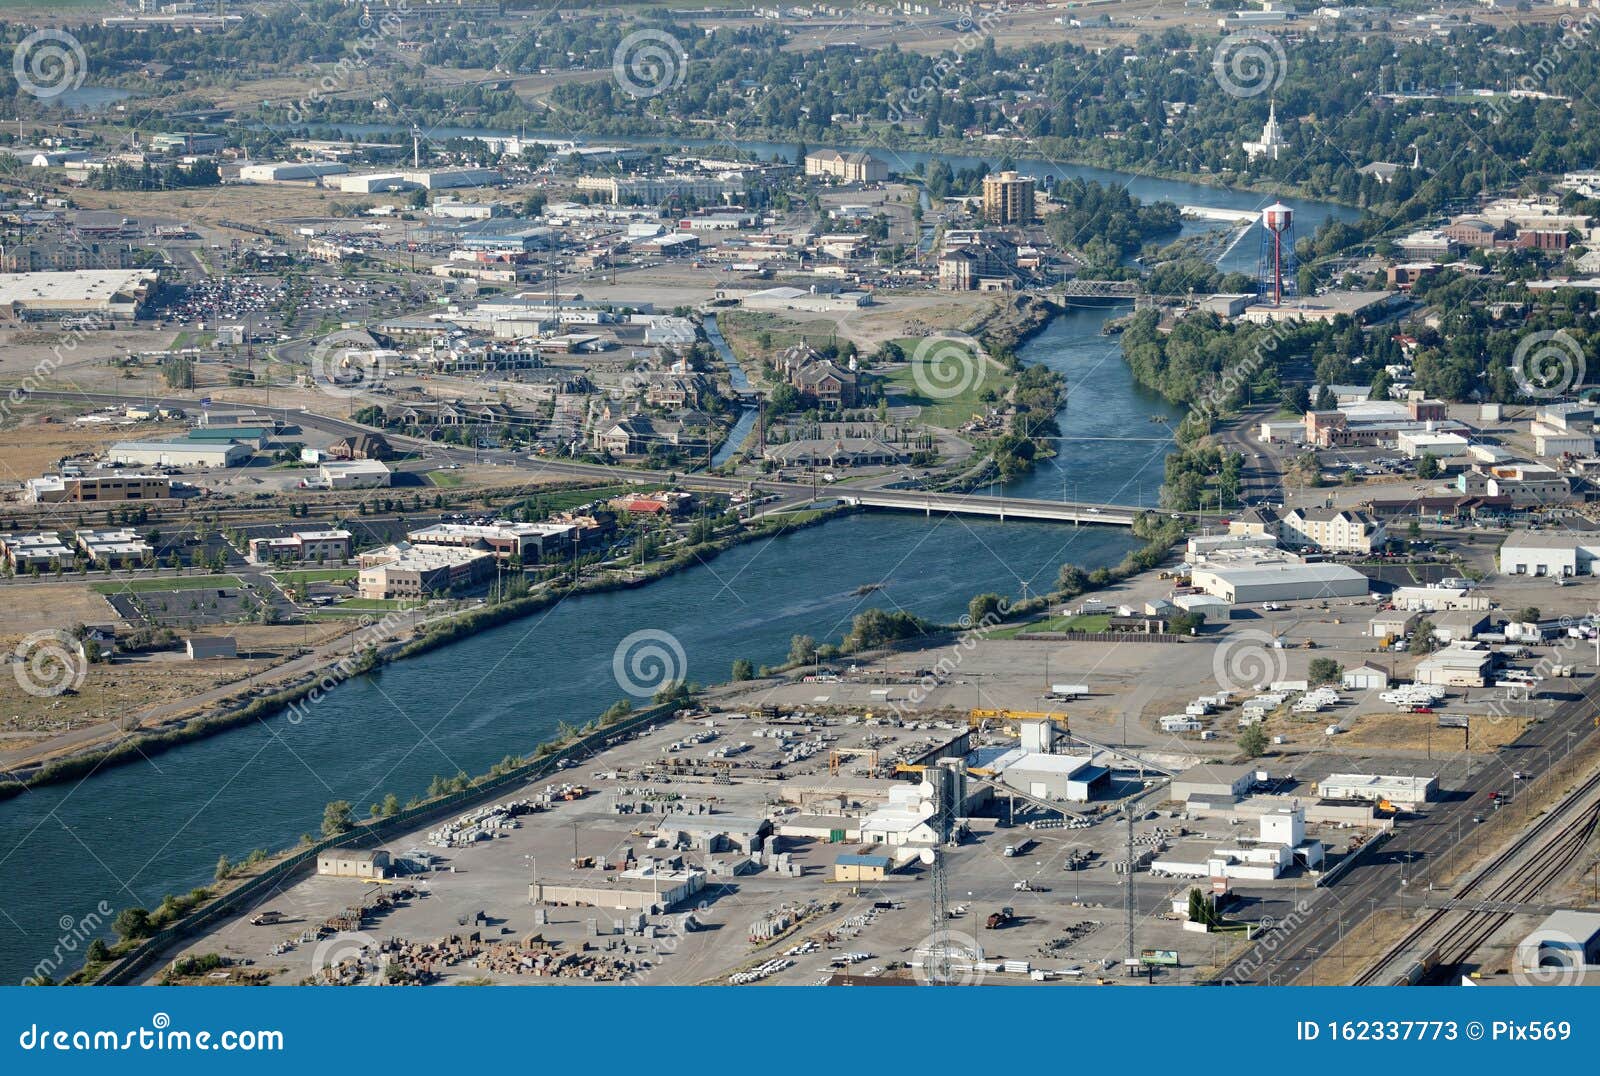 The Snake River Running through the City of Idaho Falls. Idaho. Stock